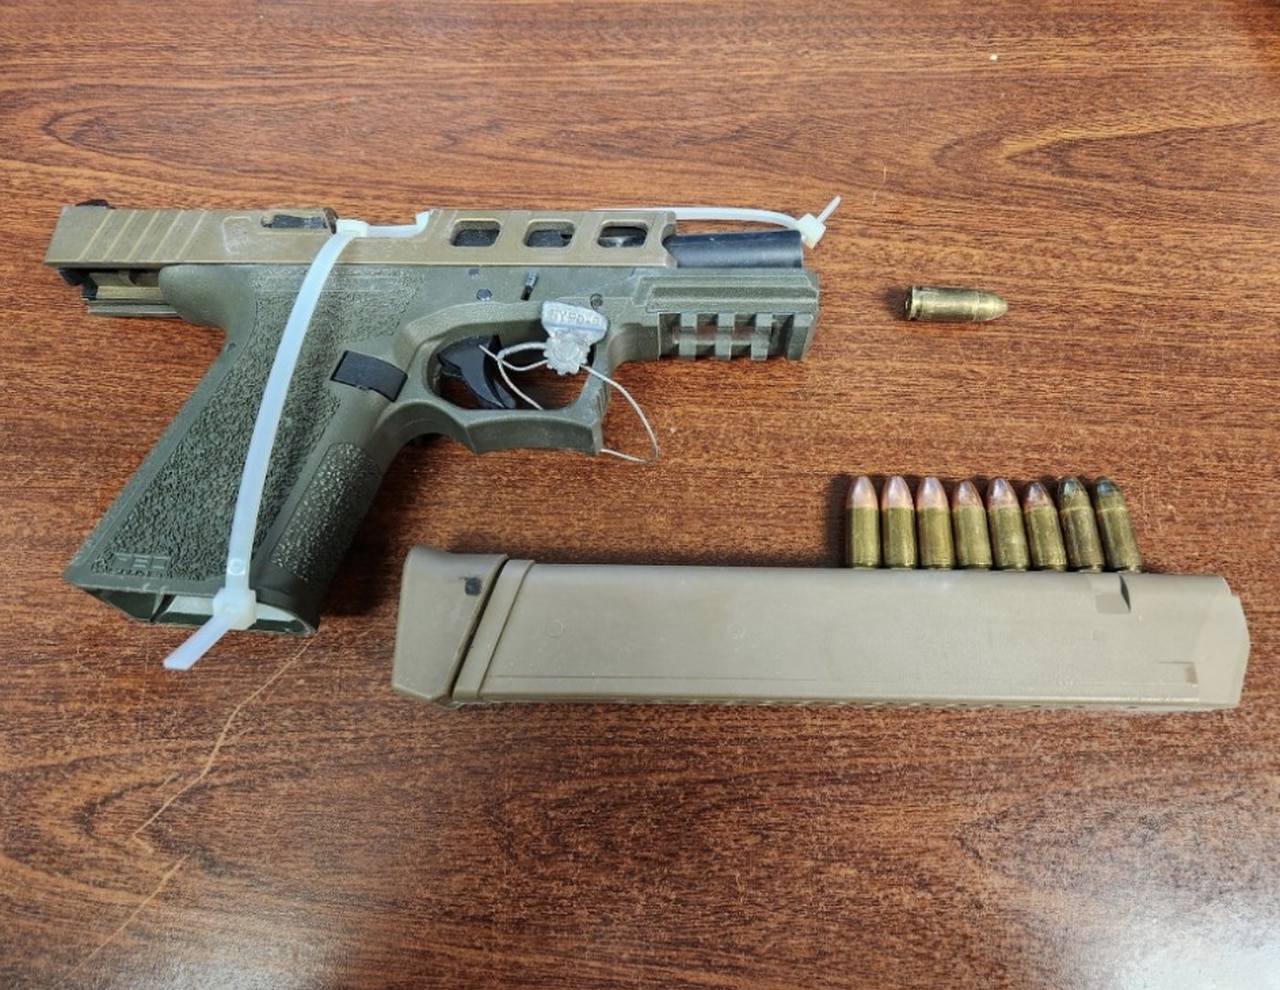 Ghost gun recovered in Eltingville